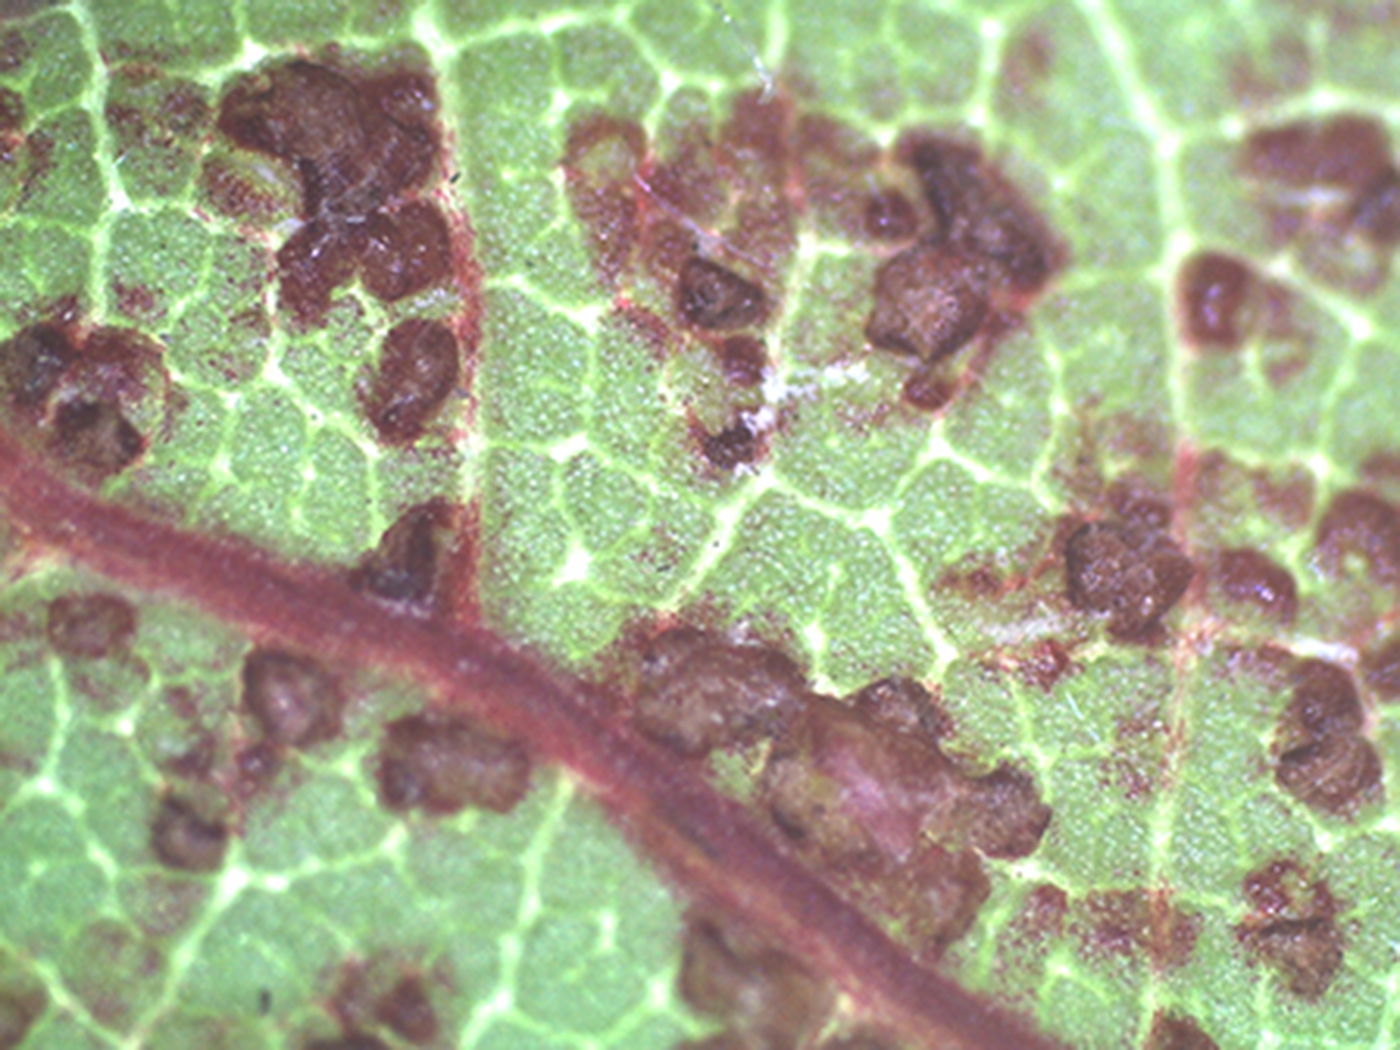 Close-up of oedema. 